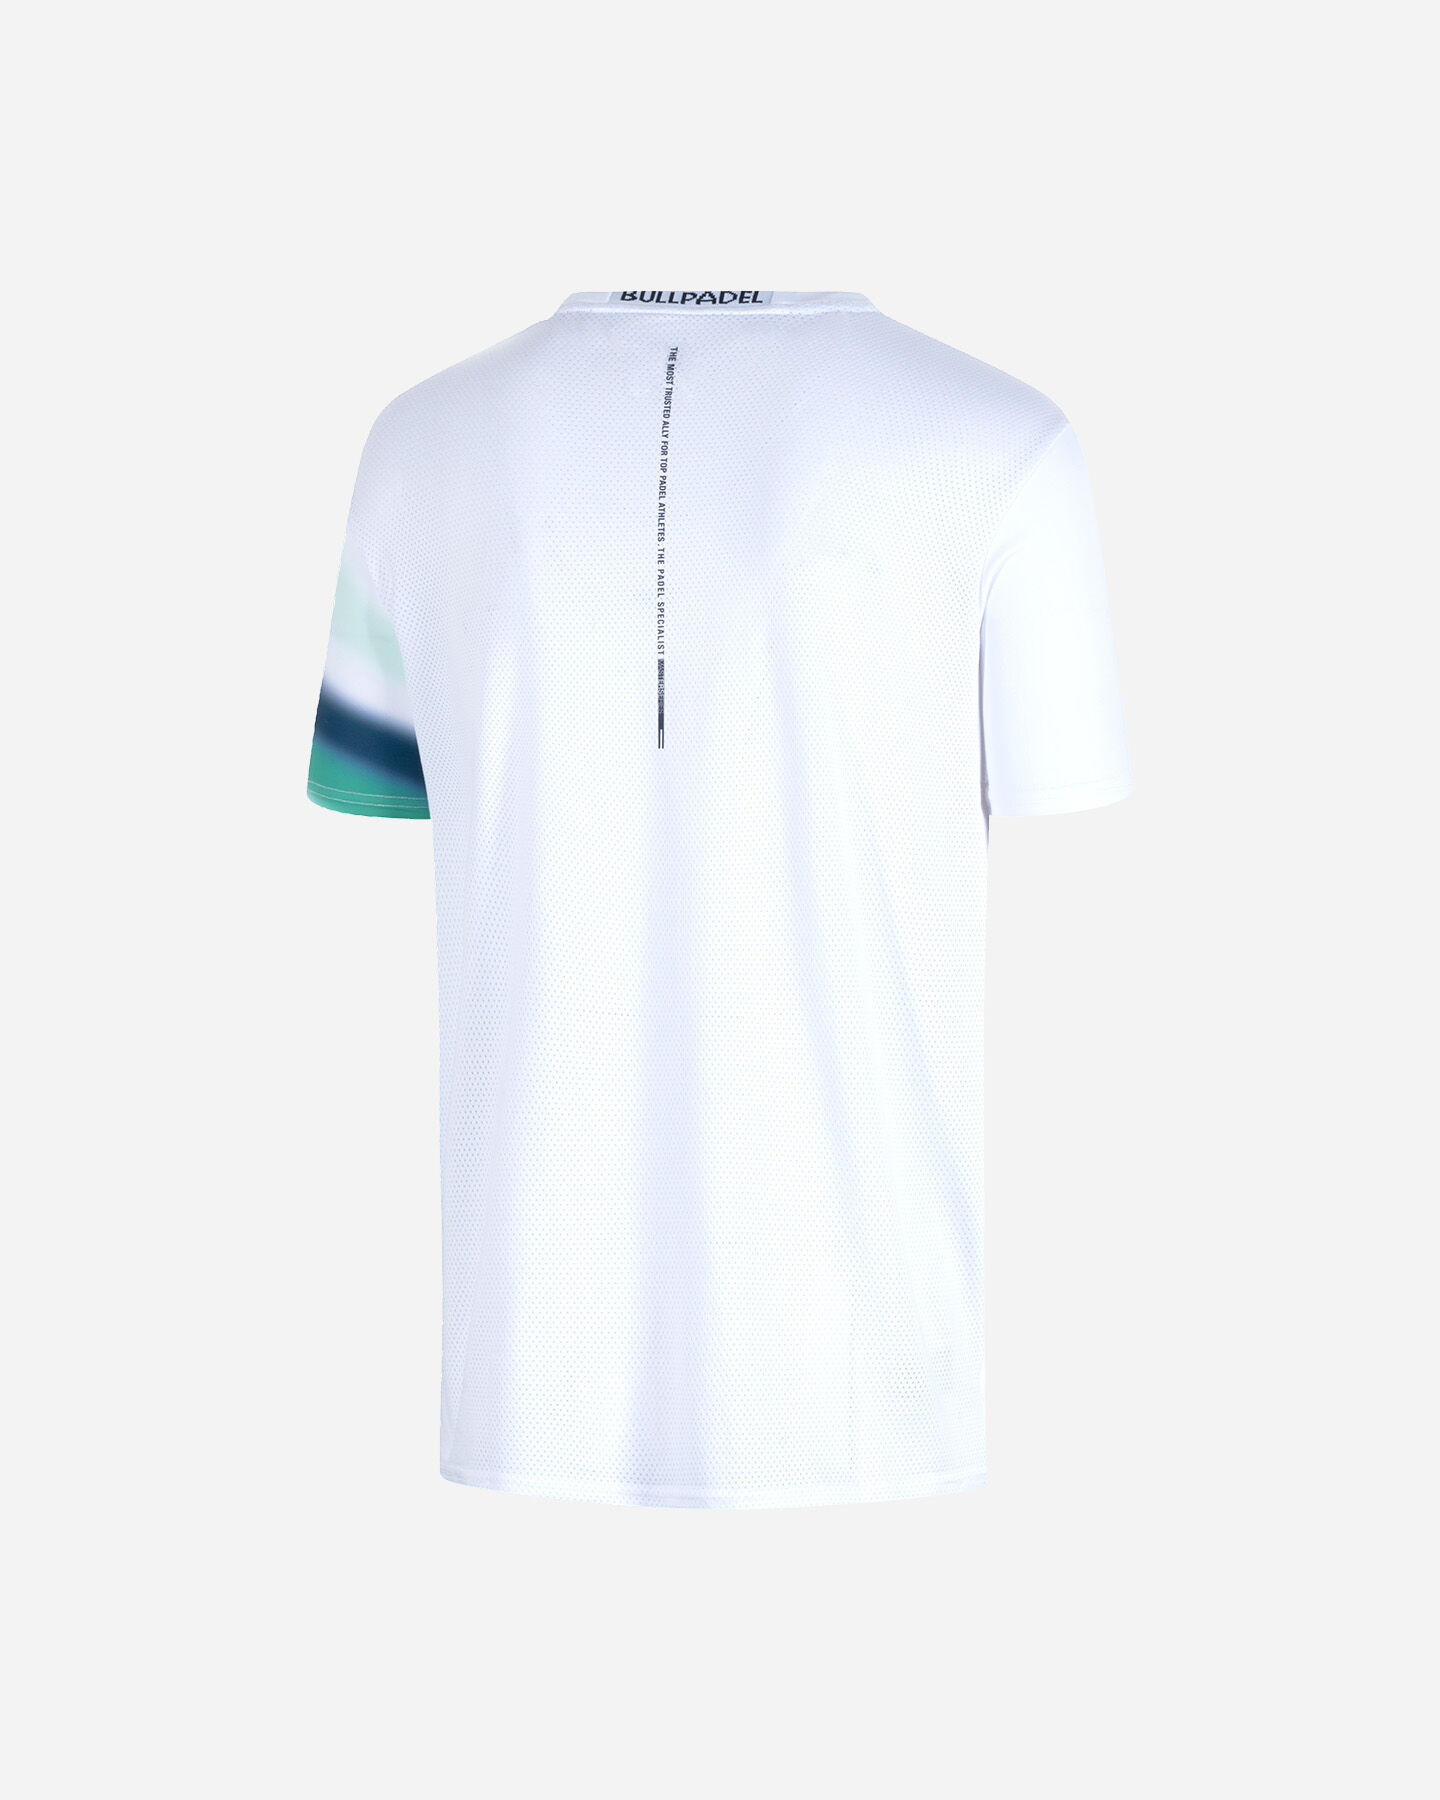  T-Shirt tennis BULLPADEL MISMO M S4131949|12|S scatto 1